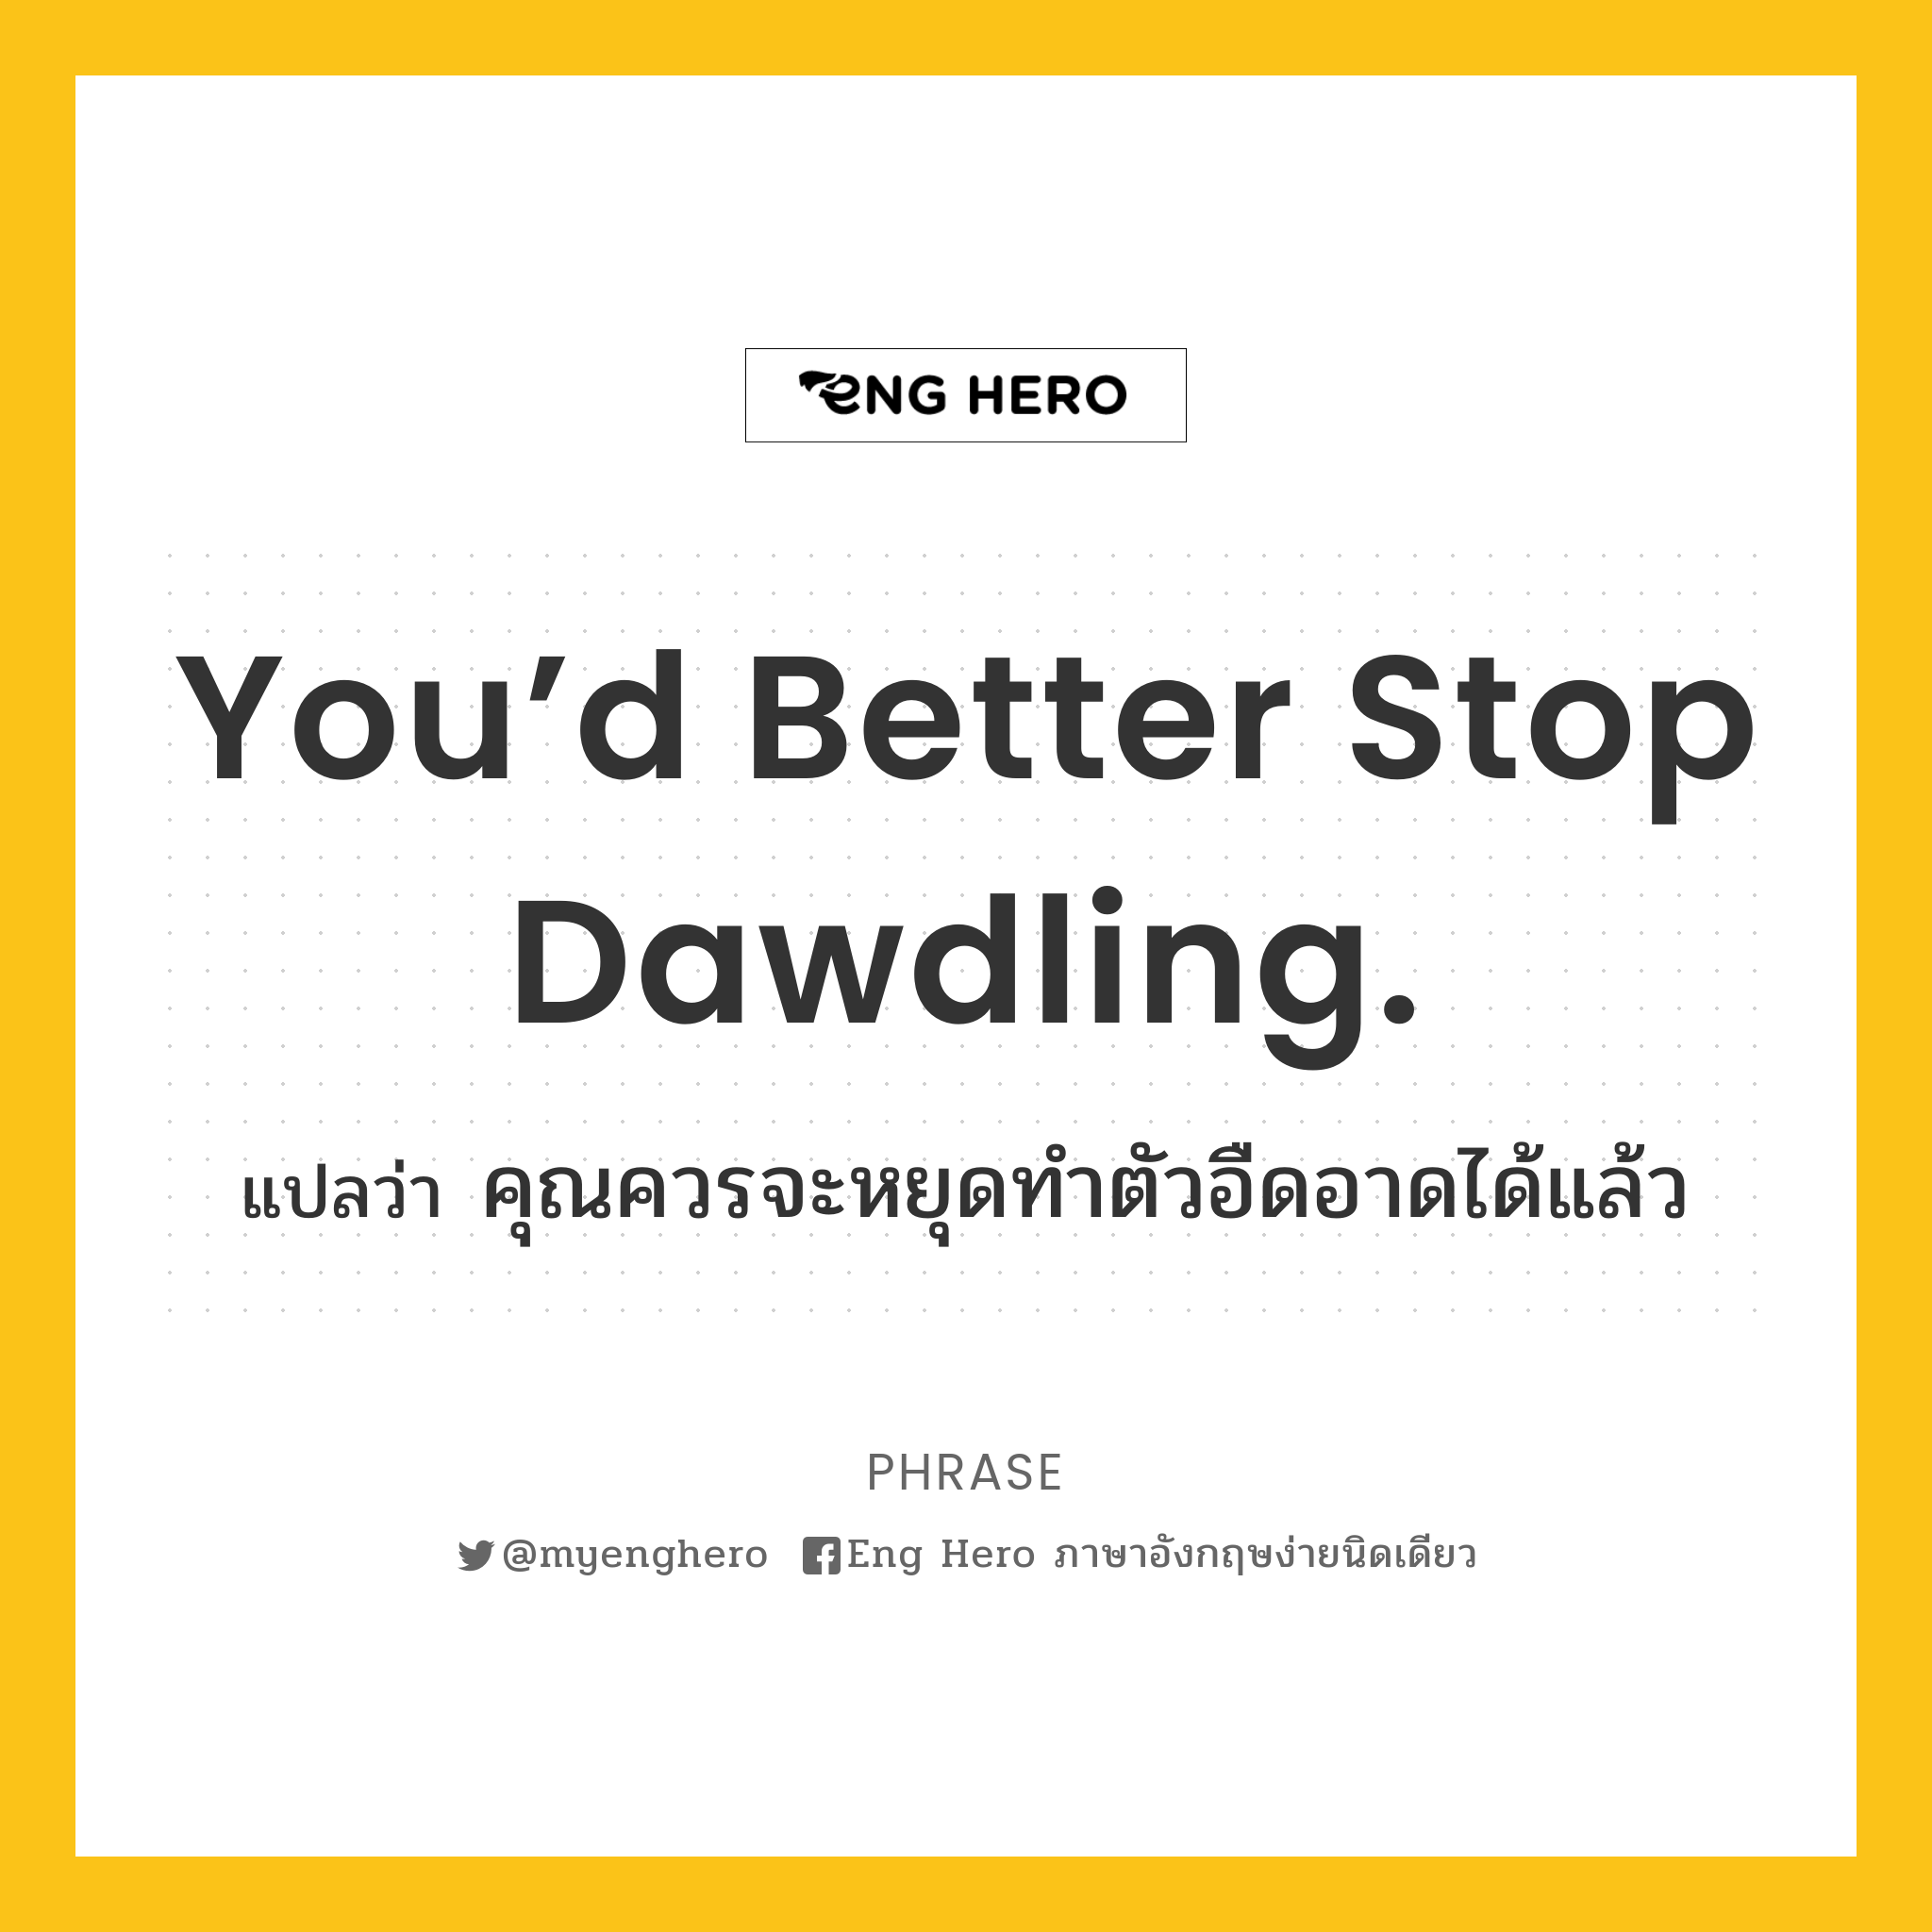 You’d better stop dawdling.